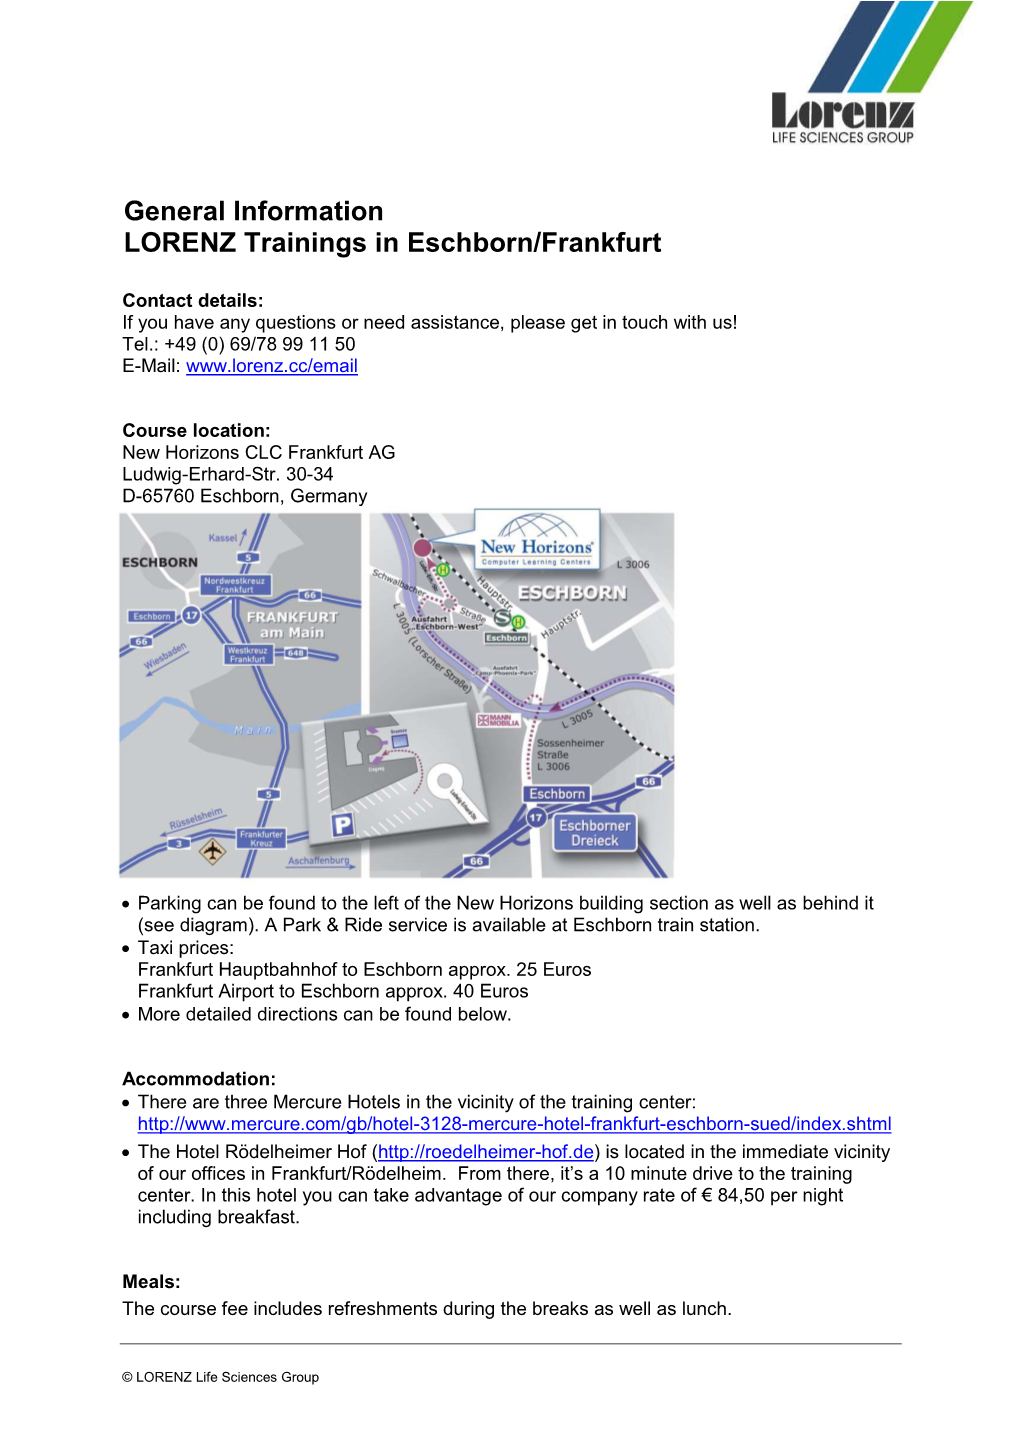 General Information LORENZ Trainings in Eschborn/Frankfurt